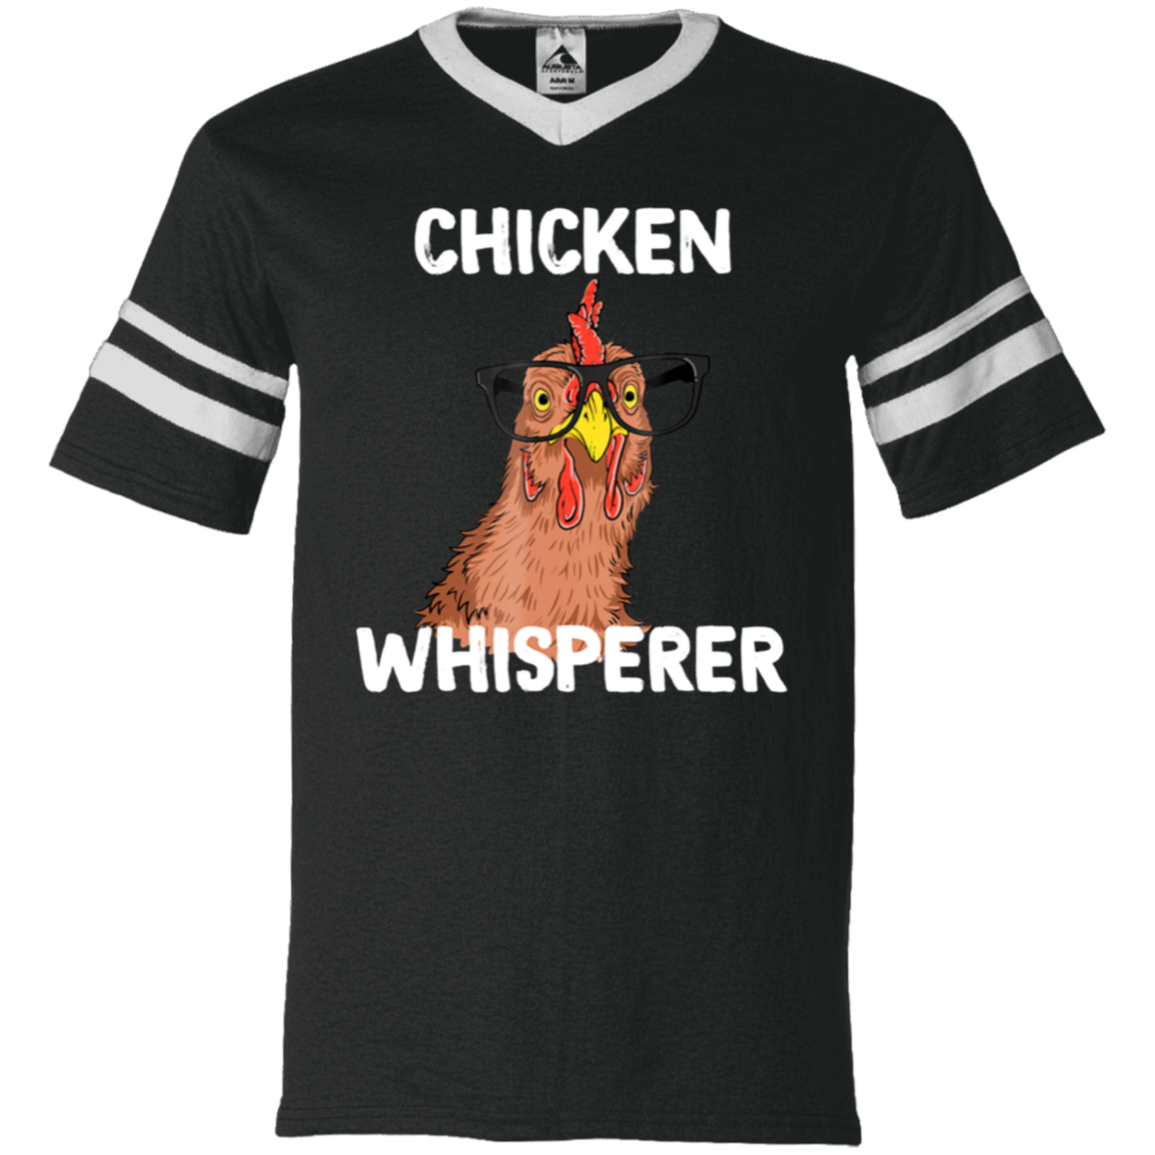 Chicken Whisperer Funny Jersey